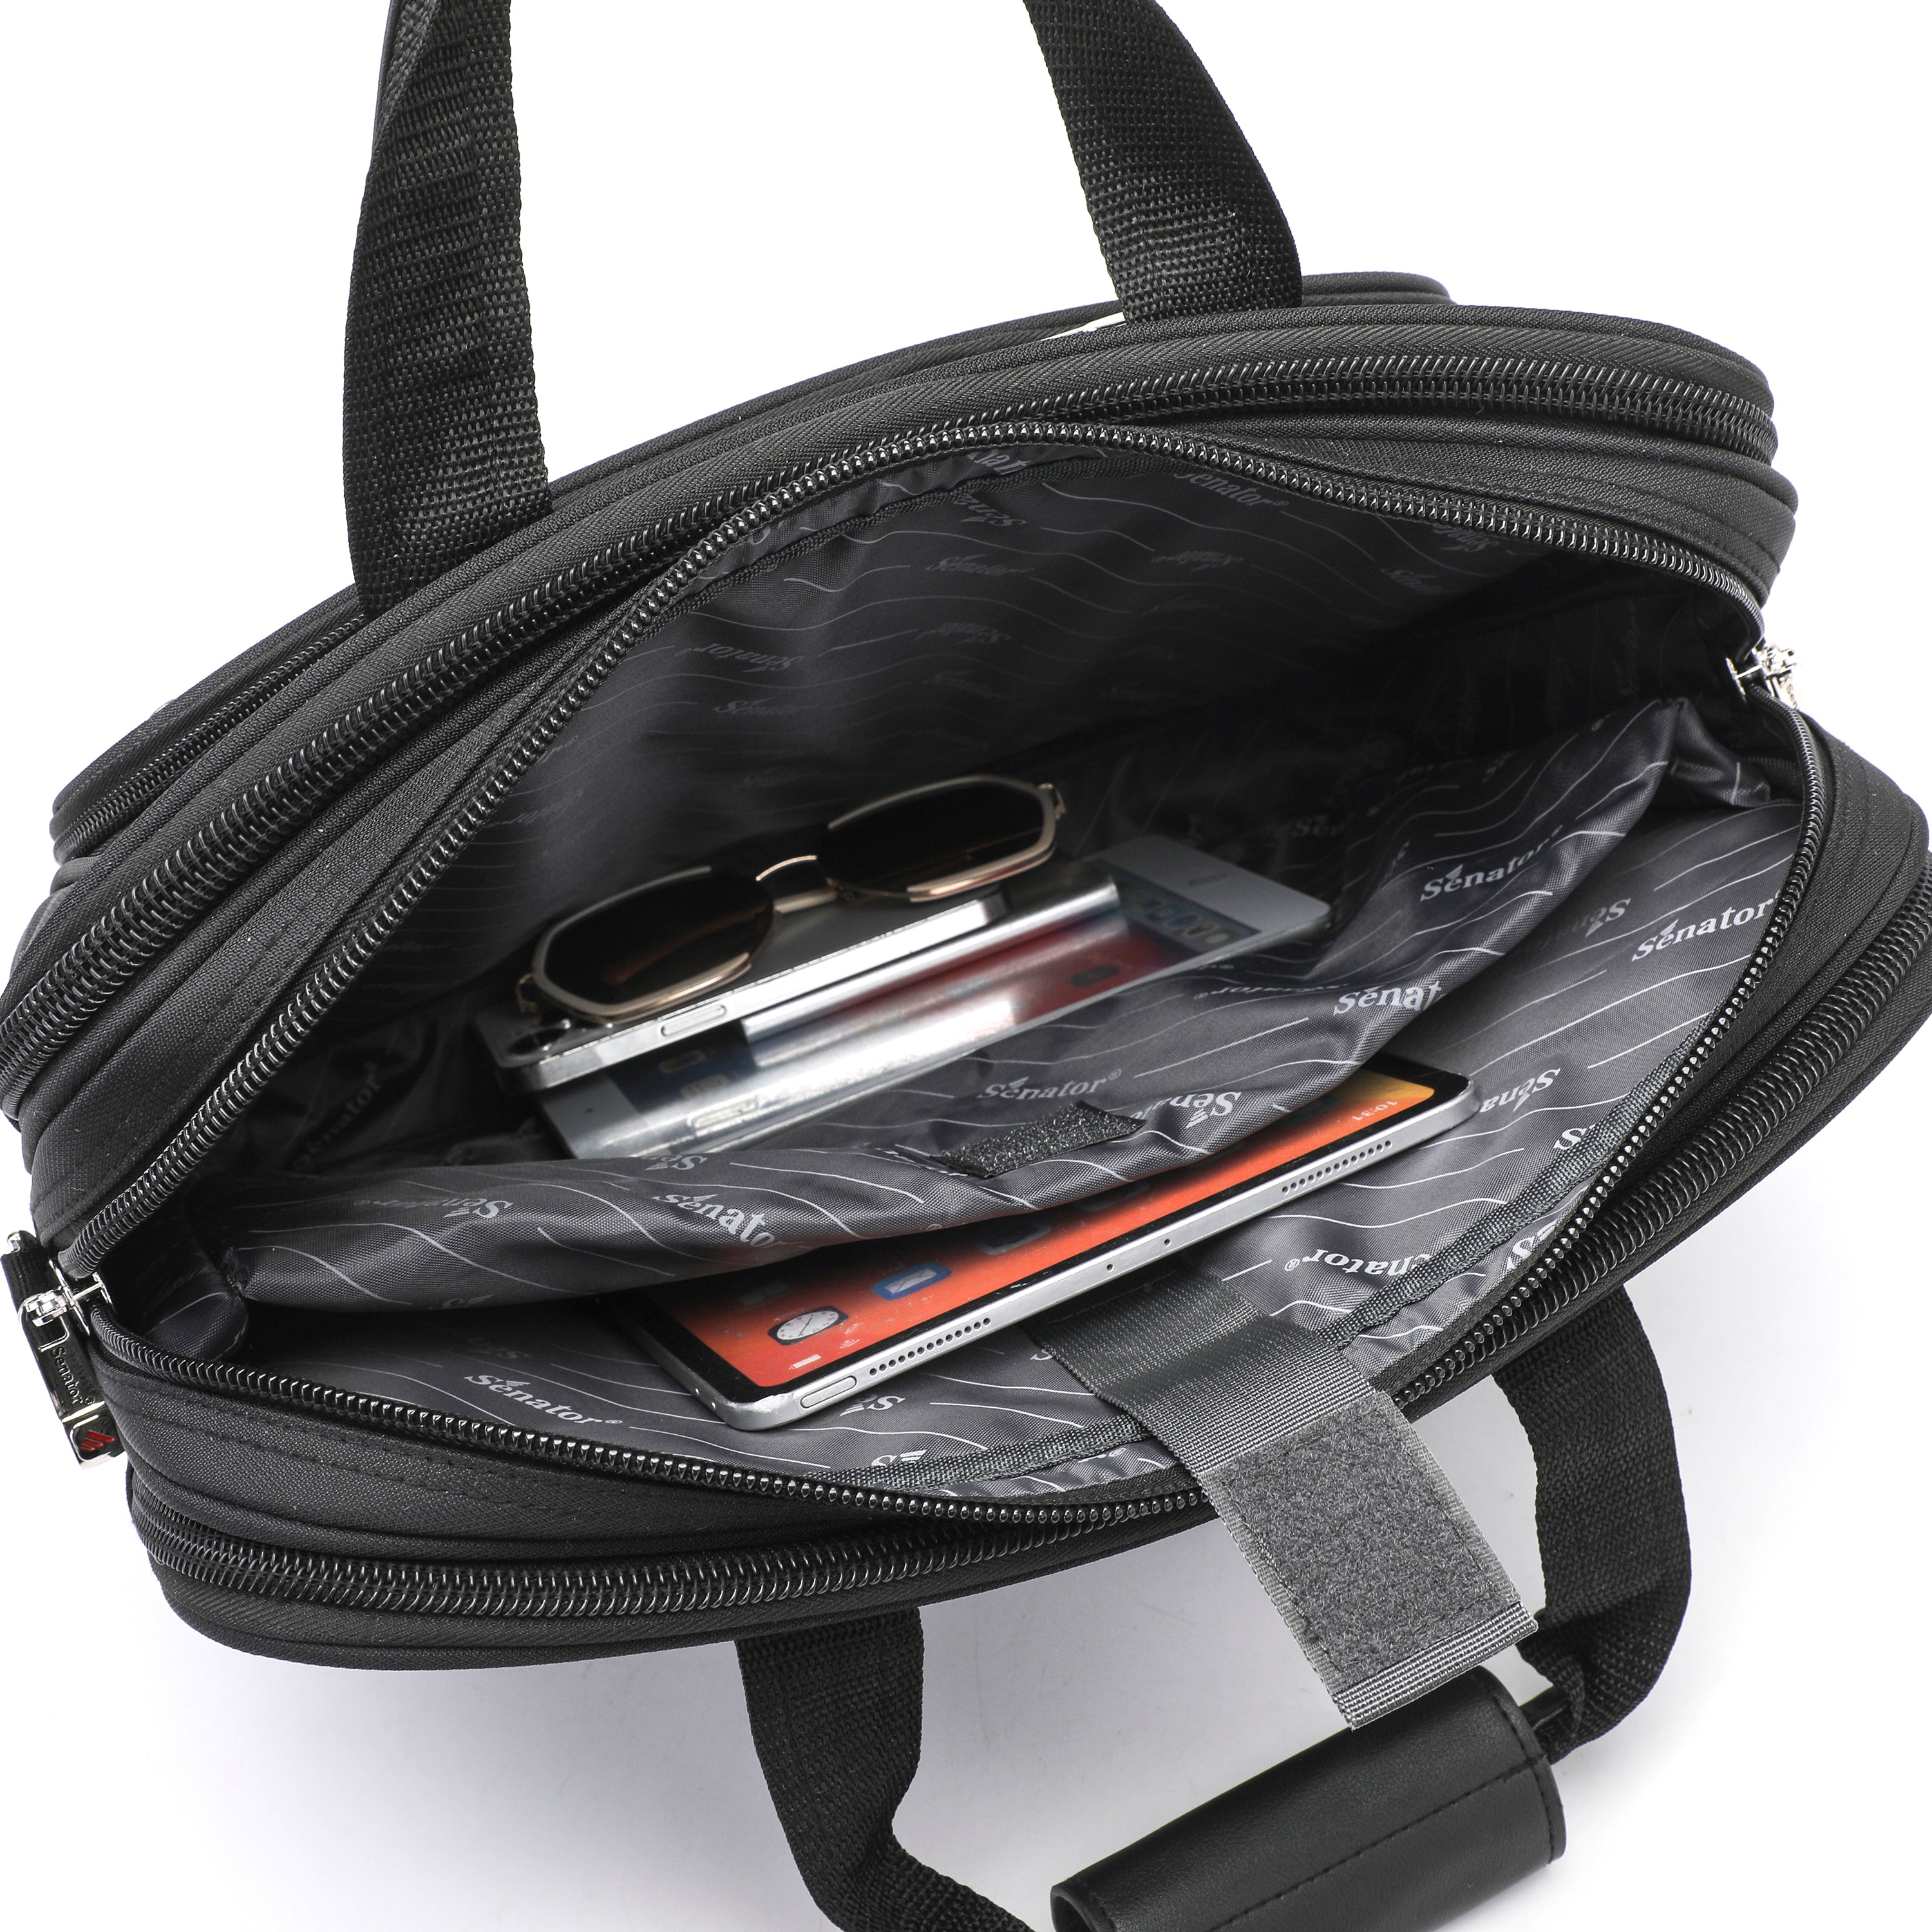 Senator 15.5 inch Nylon Shoulder Laptop Bag Light Weight Water Resistant with RFID pockets and Adjustable Shoulder Straps Business College School Students - KH8121